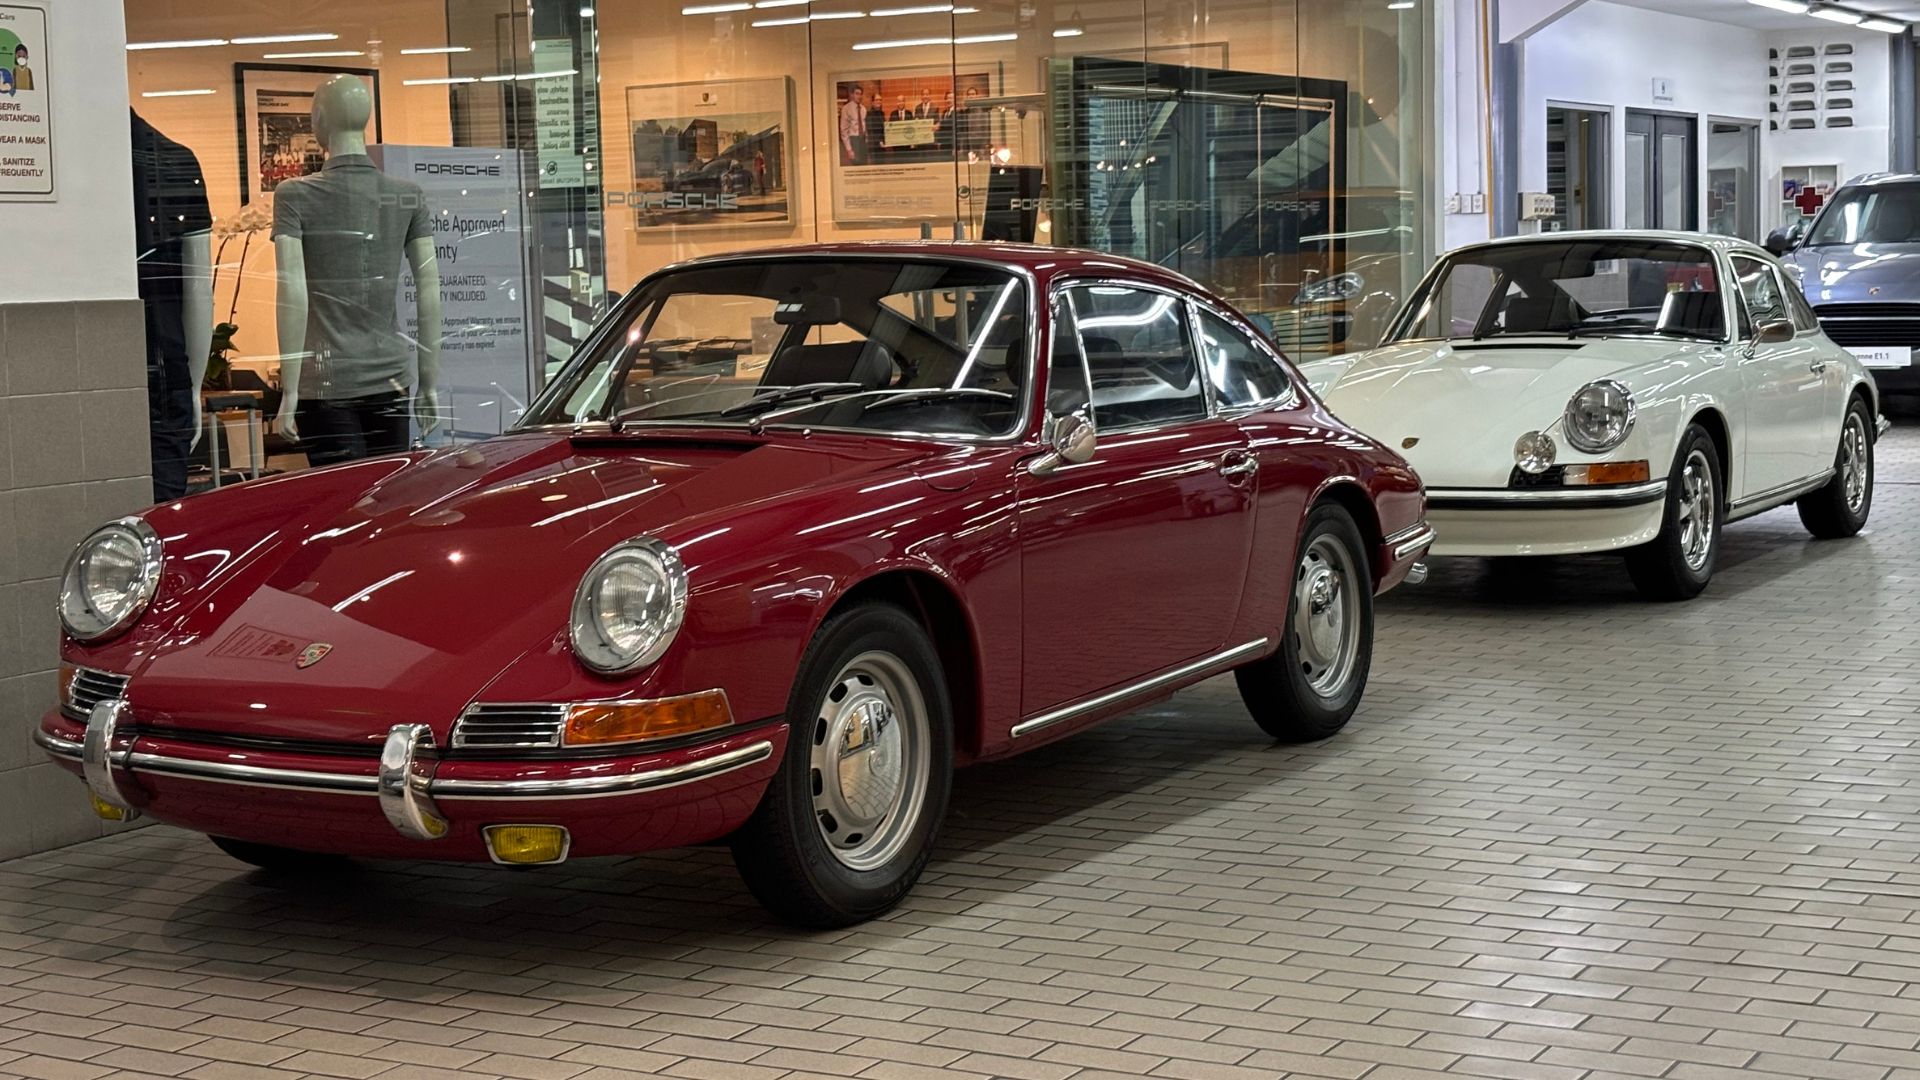 Porsche at 75: A visual history